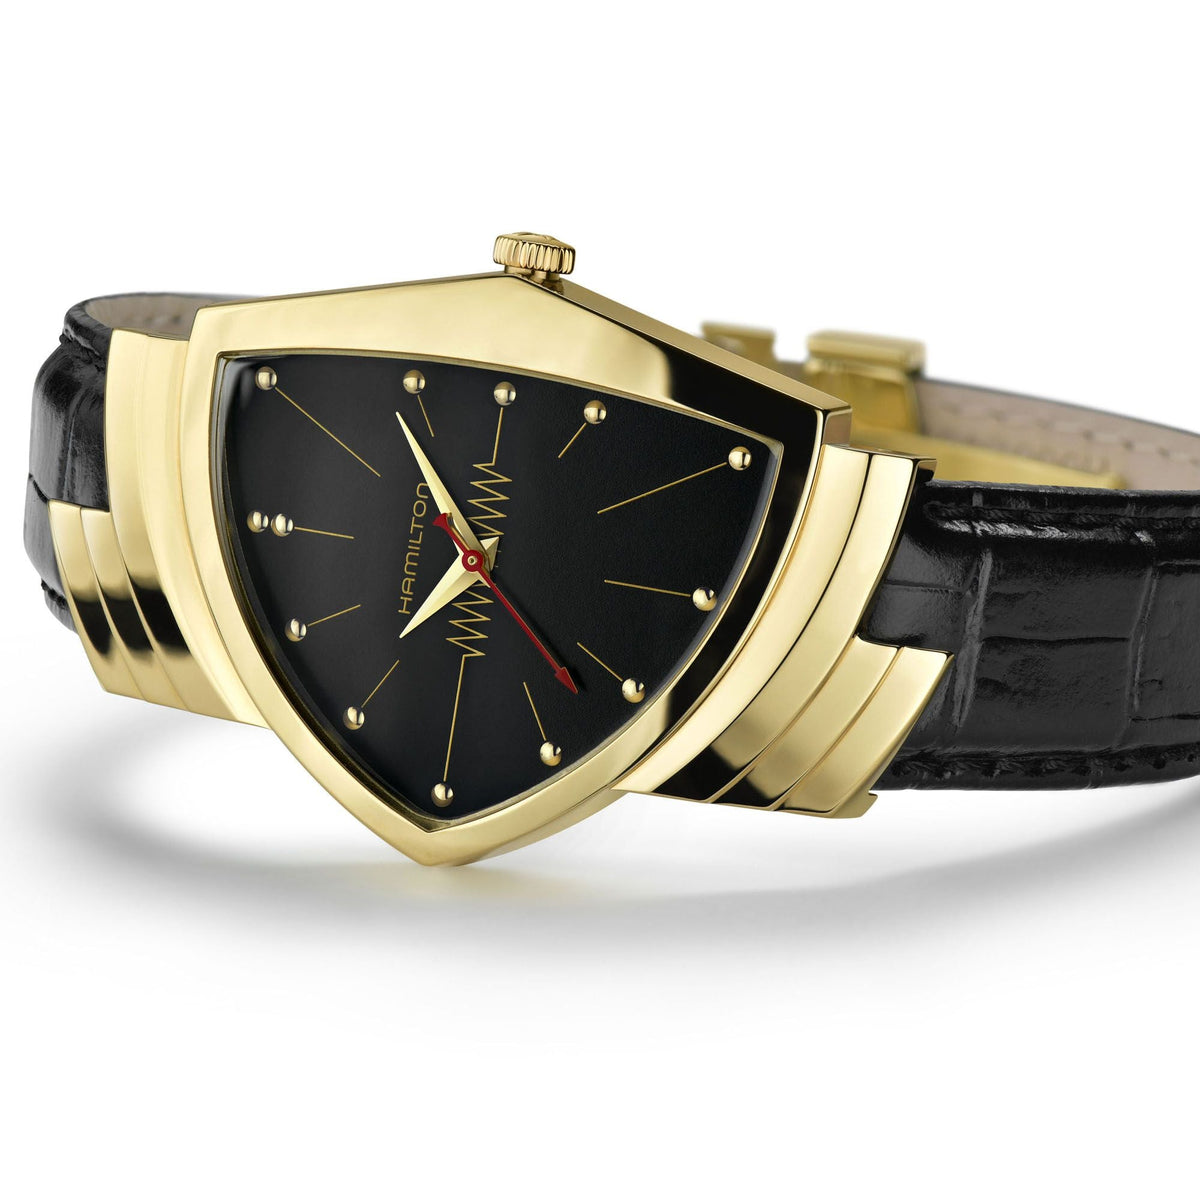 Hamilton Ventura Limited Edition Quartz Gold Watch H24311730